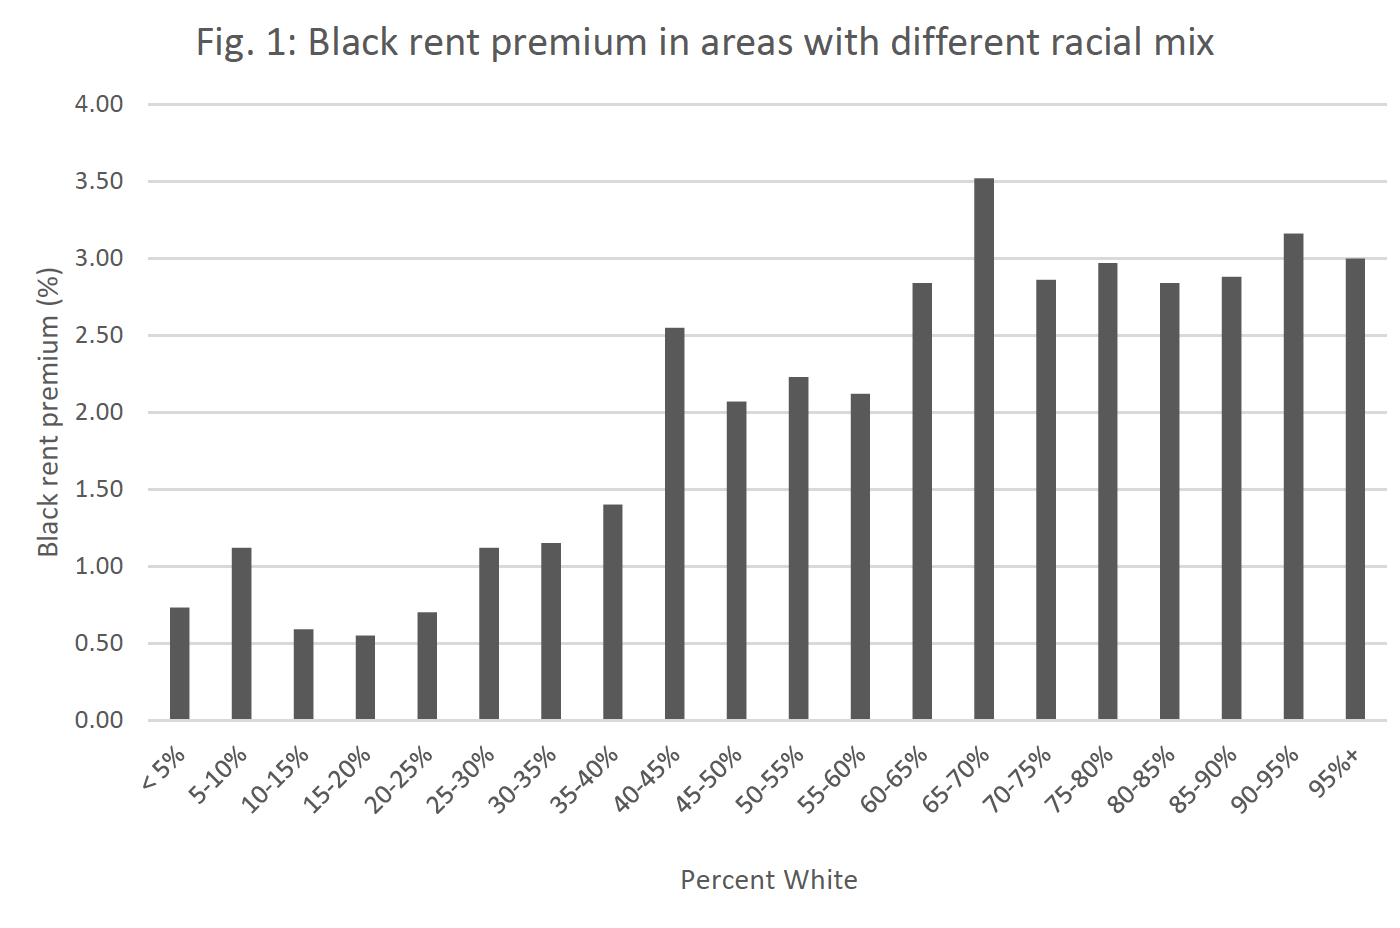 Black rental premiums relative to percent white of the neighborhood